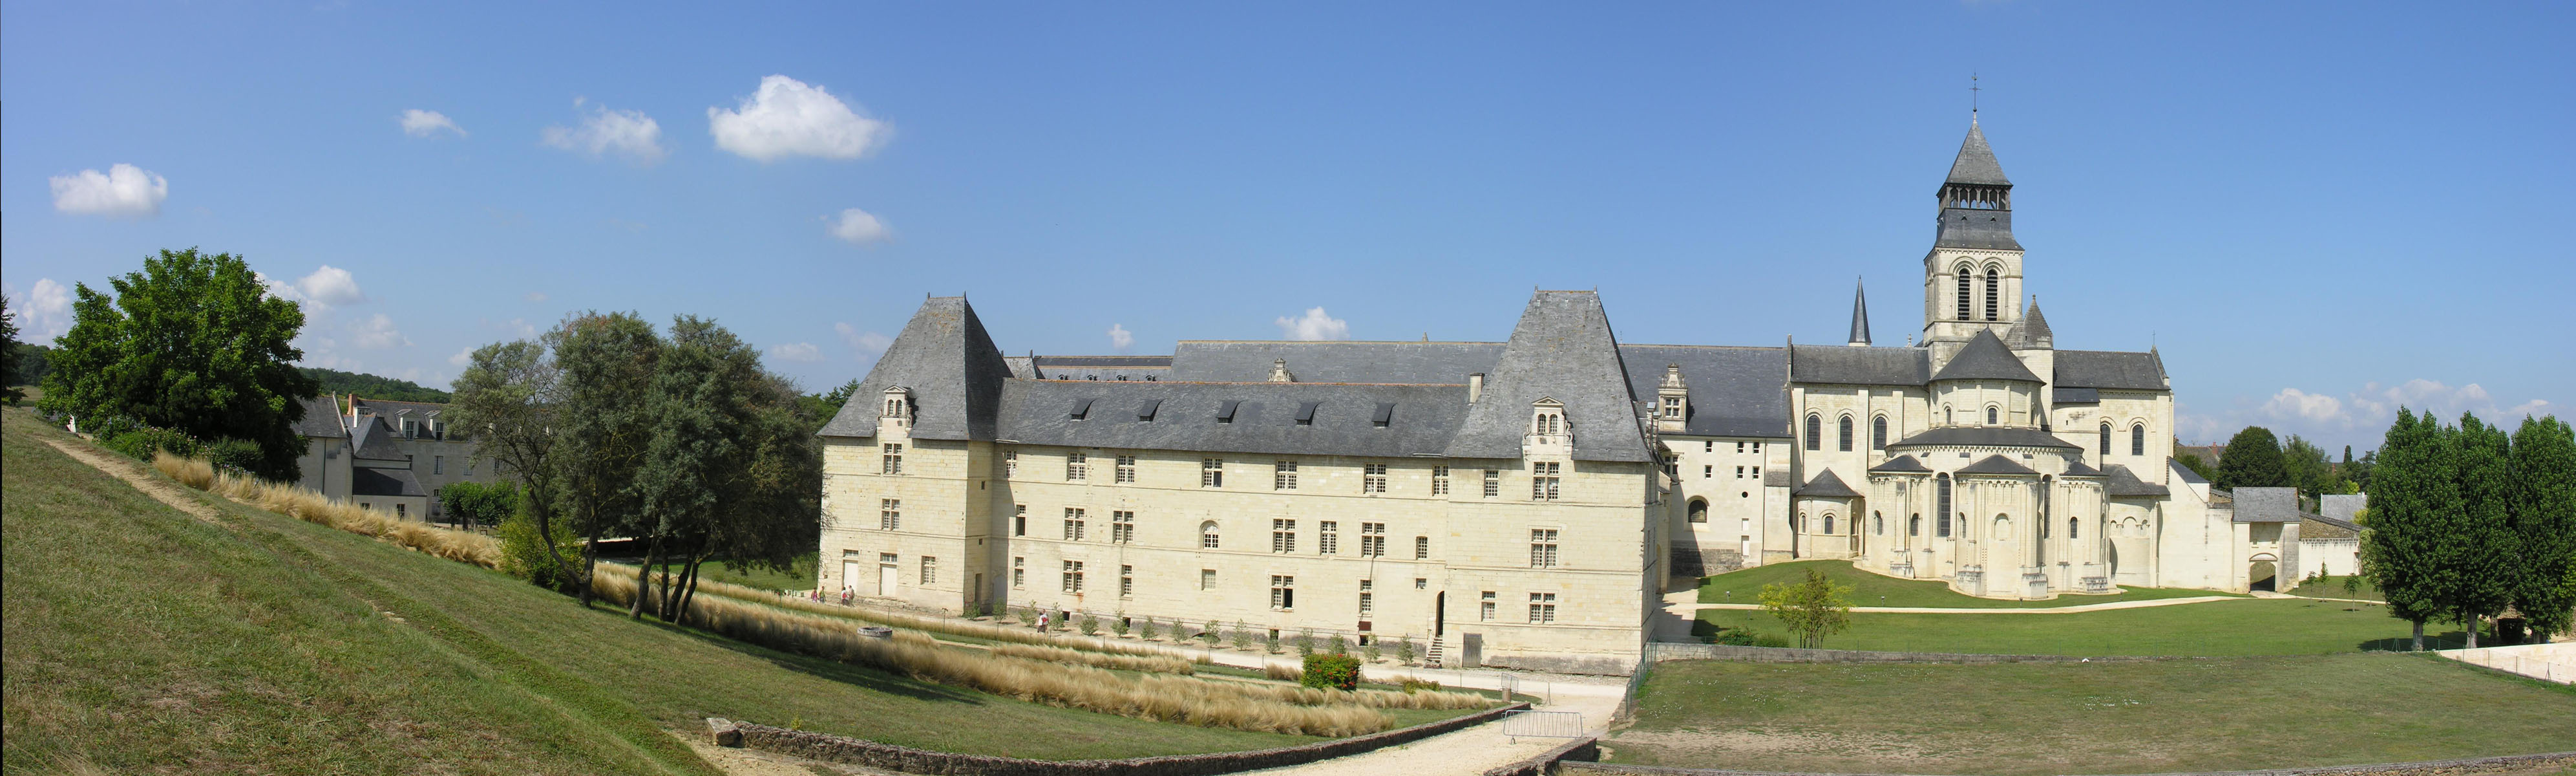 Abbey of Fontevraud - France.jpg